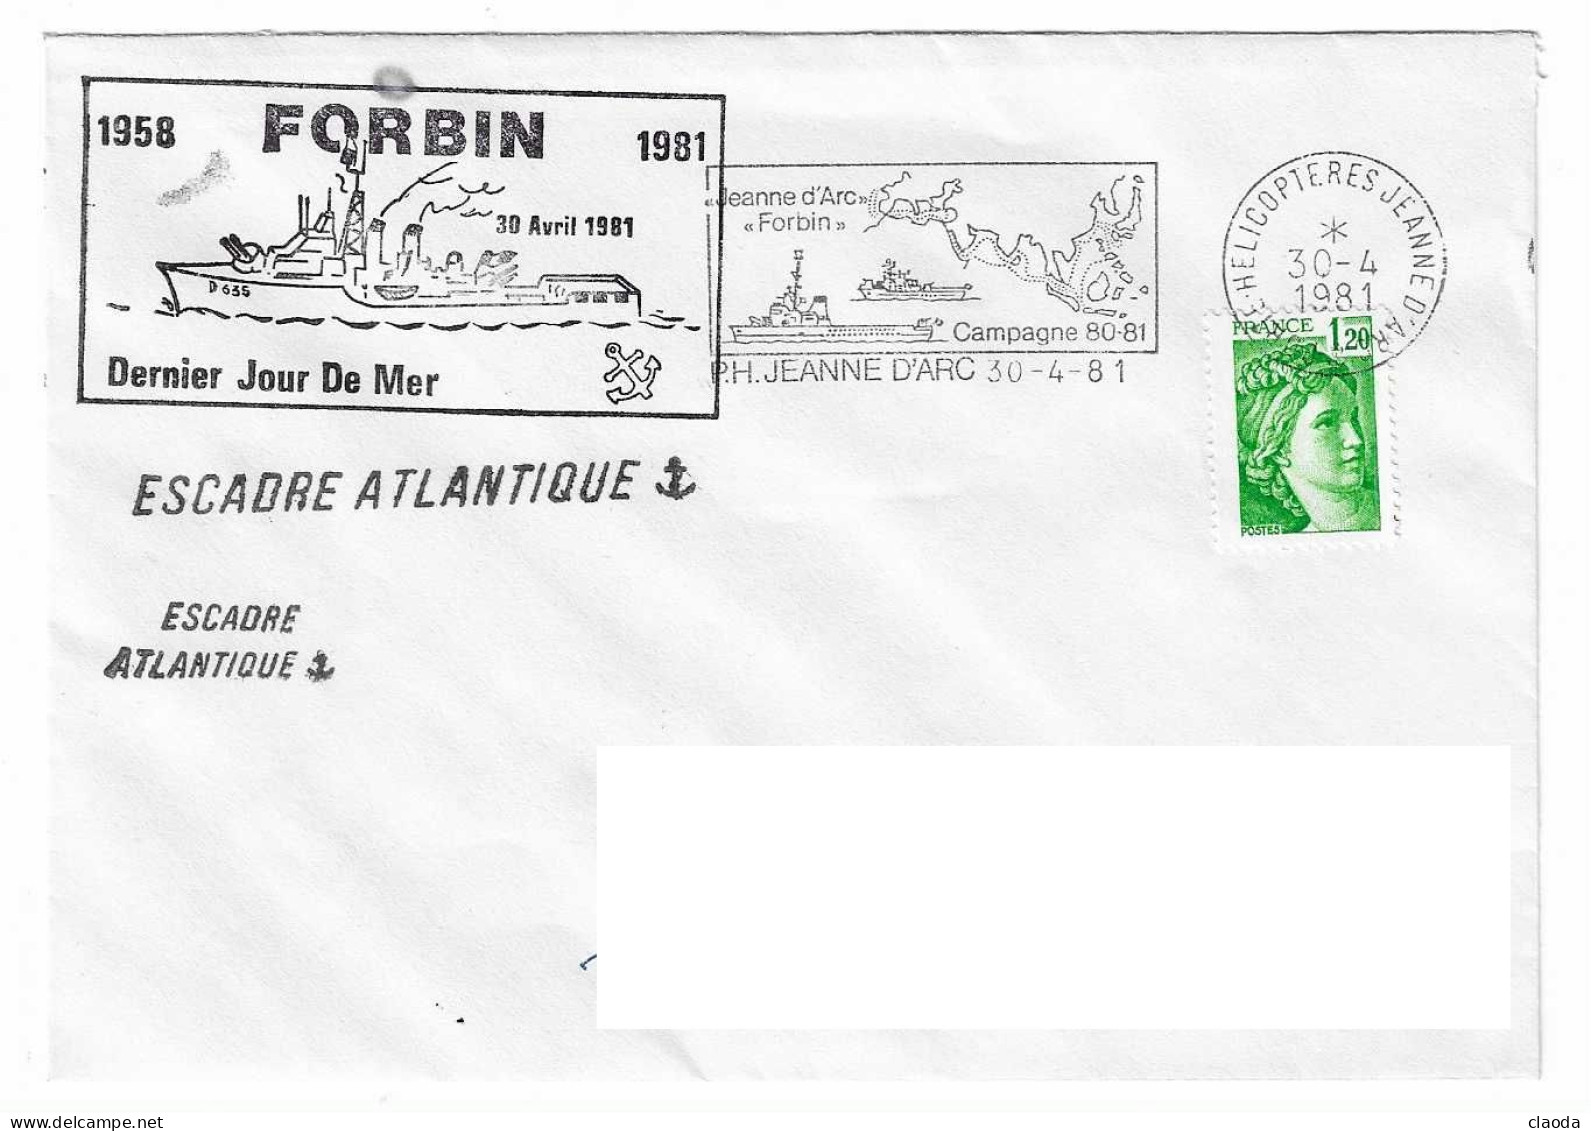 173 JDA -PORTE-HÉLICOPTÈRES JEANNE D'ARC - FORBIN - CAMPAGNE1980-1981 DERNIER JOUR DE MER DU FORBIN - Naval Post